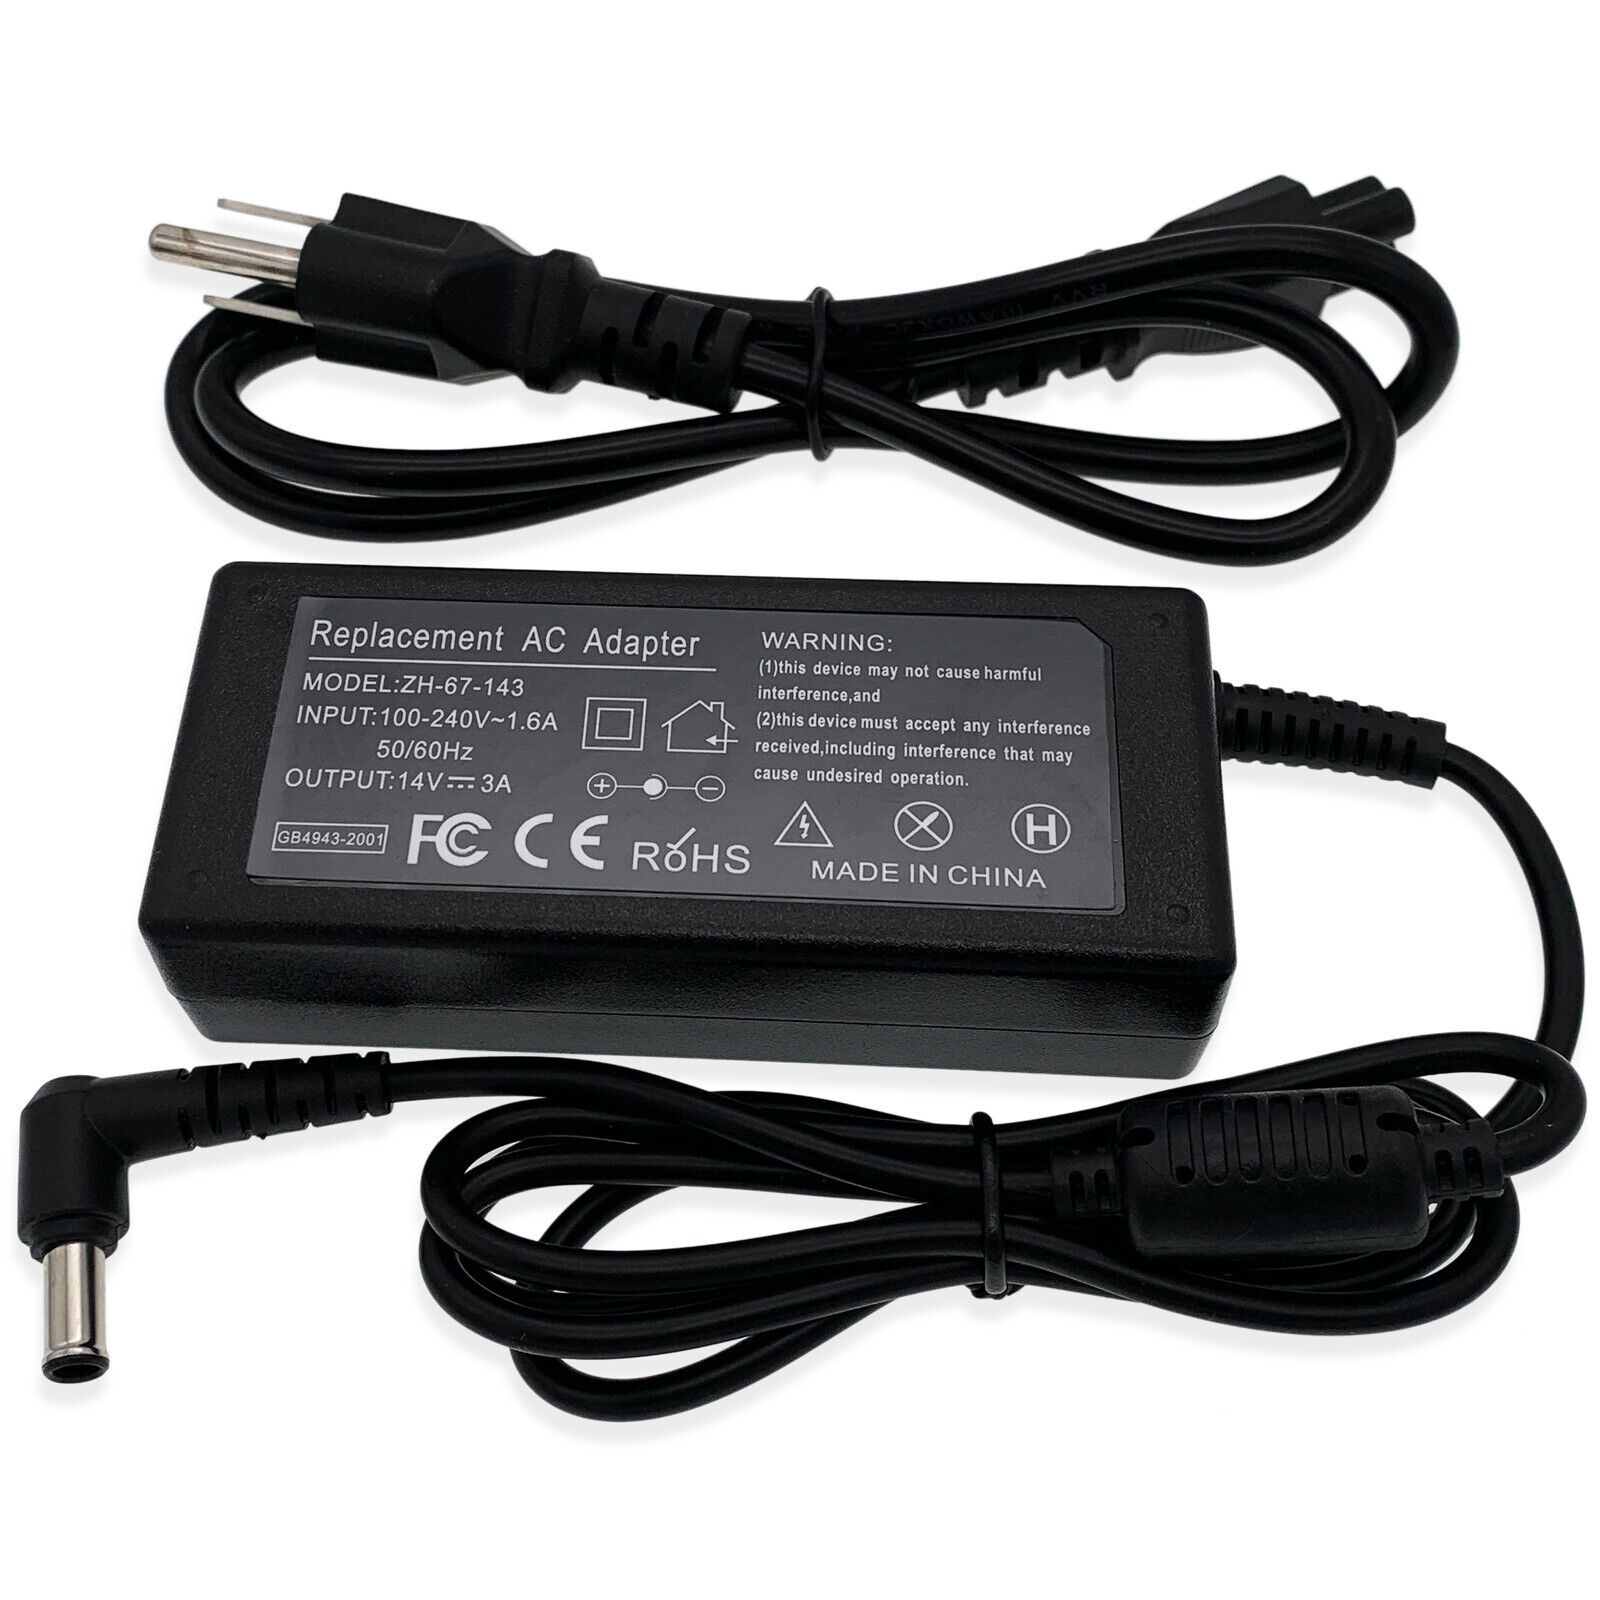 AC Adapter For Samsung UE590 U28E590D LU28E590DS/ZA Monitor Power Supply Cord